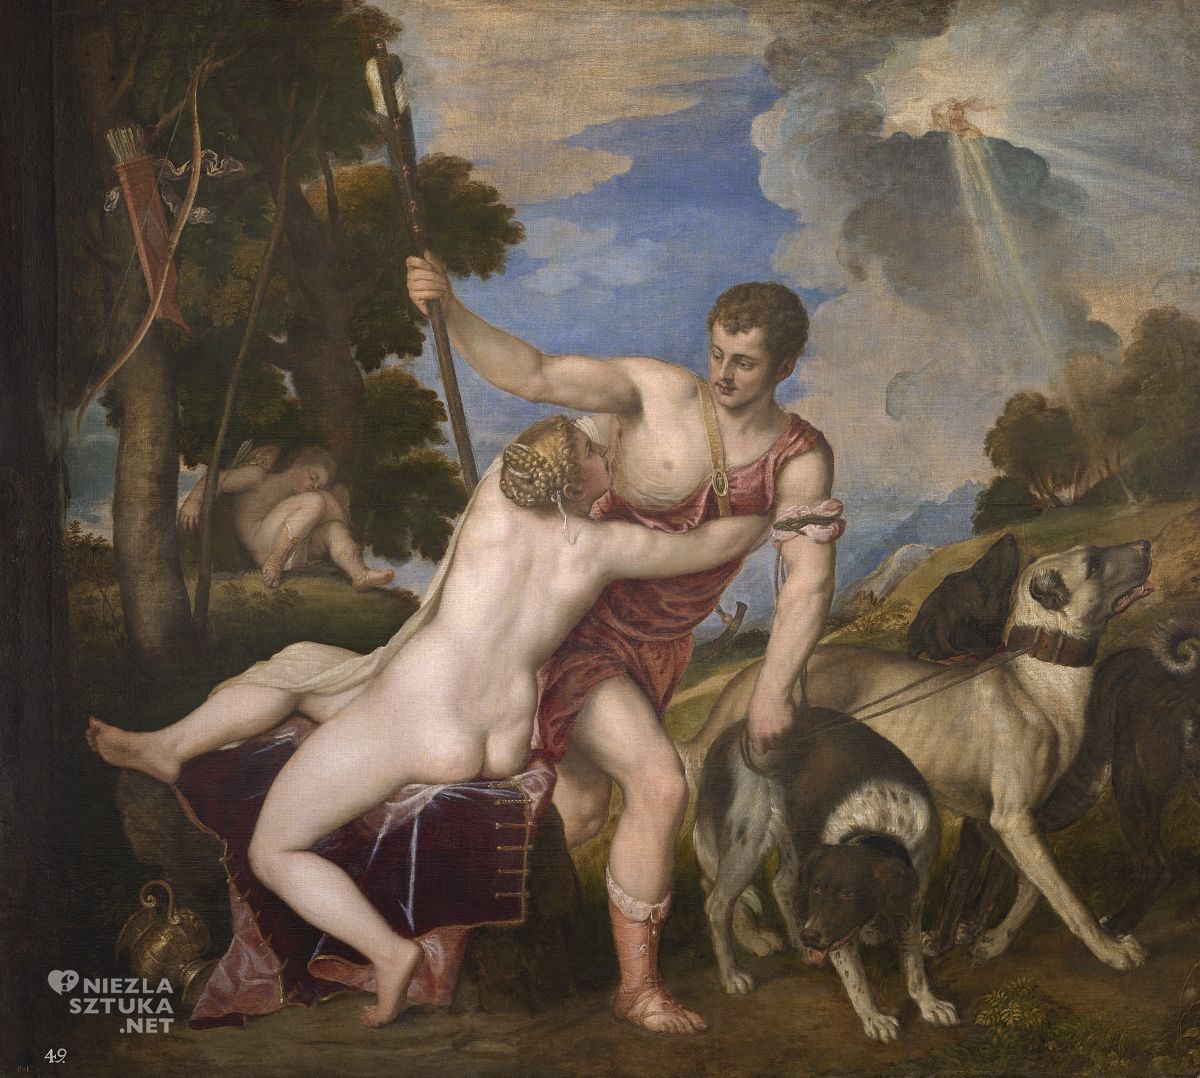 Tycjan, Wenus i Adonis, renesans, sztuka włoska, Niezła Sztuka